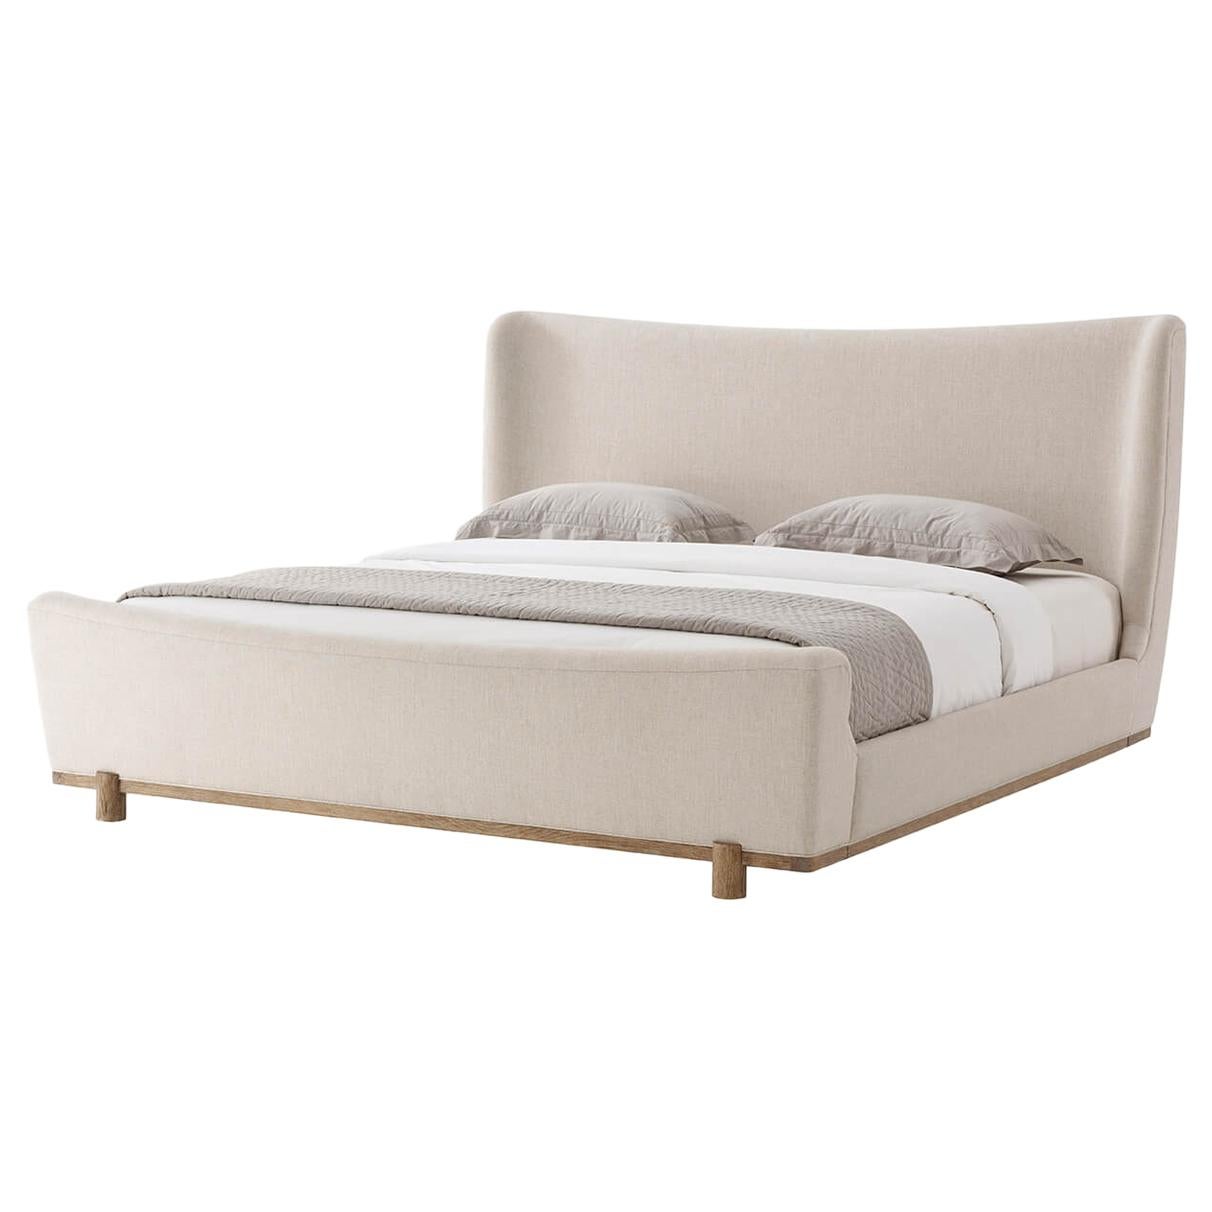 Modern Upholstered King Size Bed